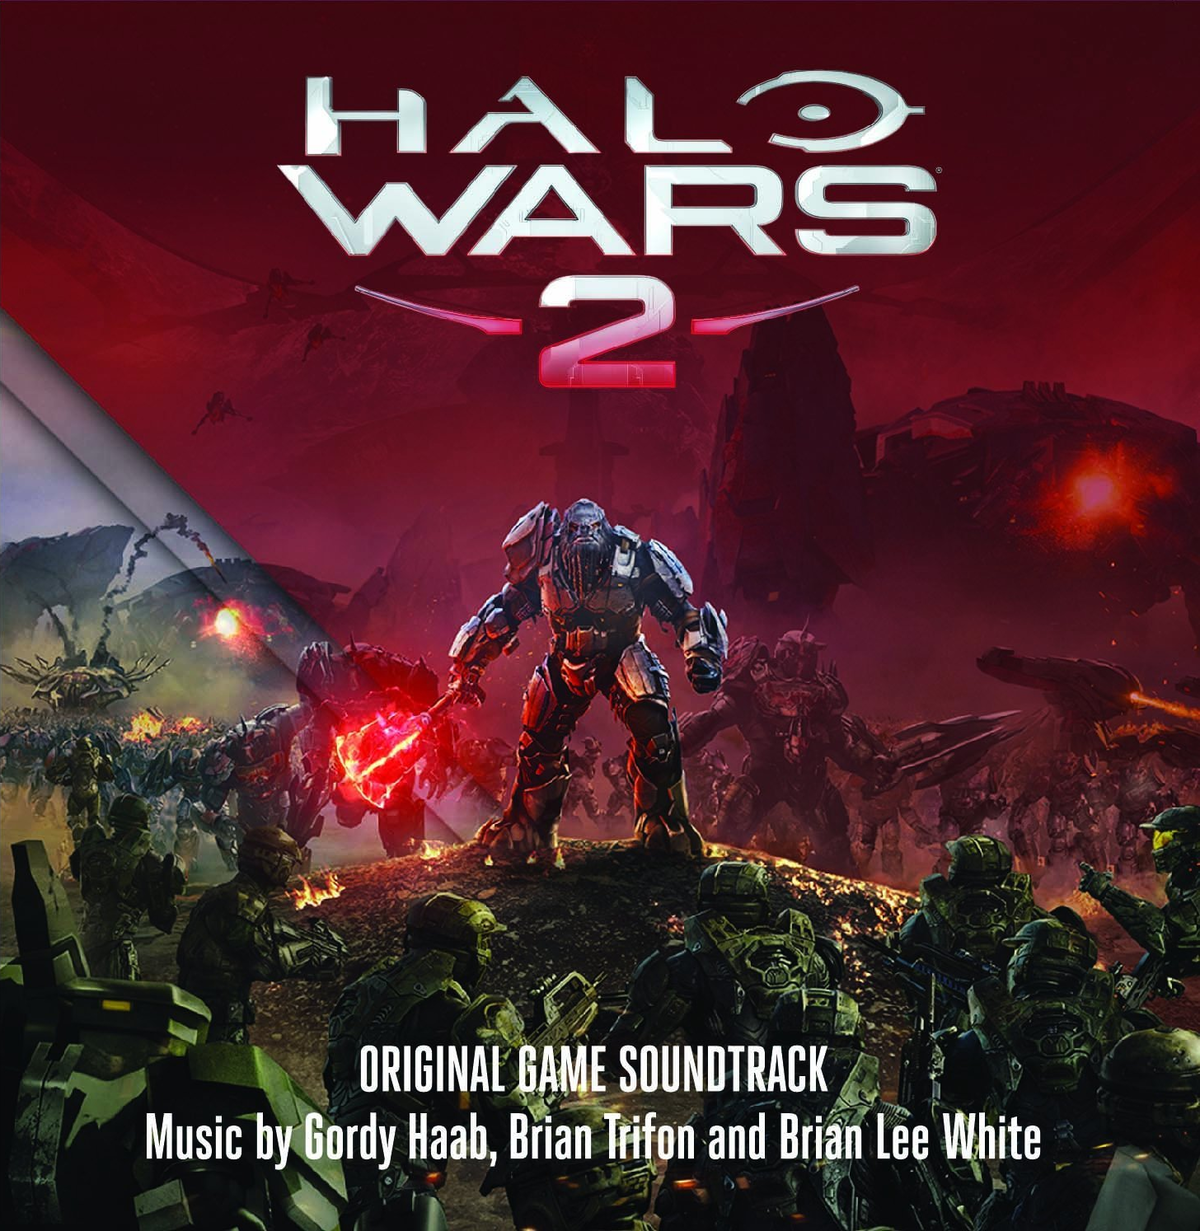 halo-wars-2-original-soundtrack-music-halopedia-the-halo-wiki